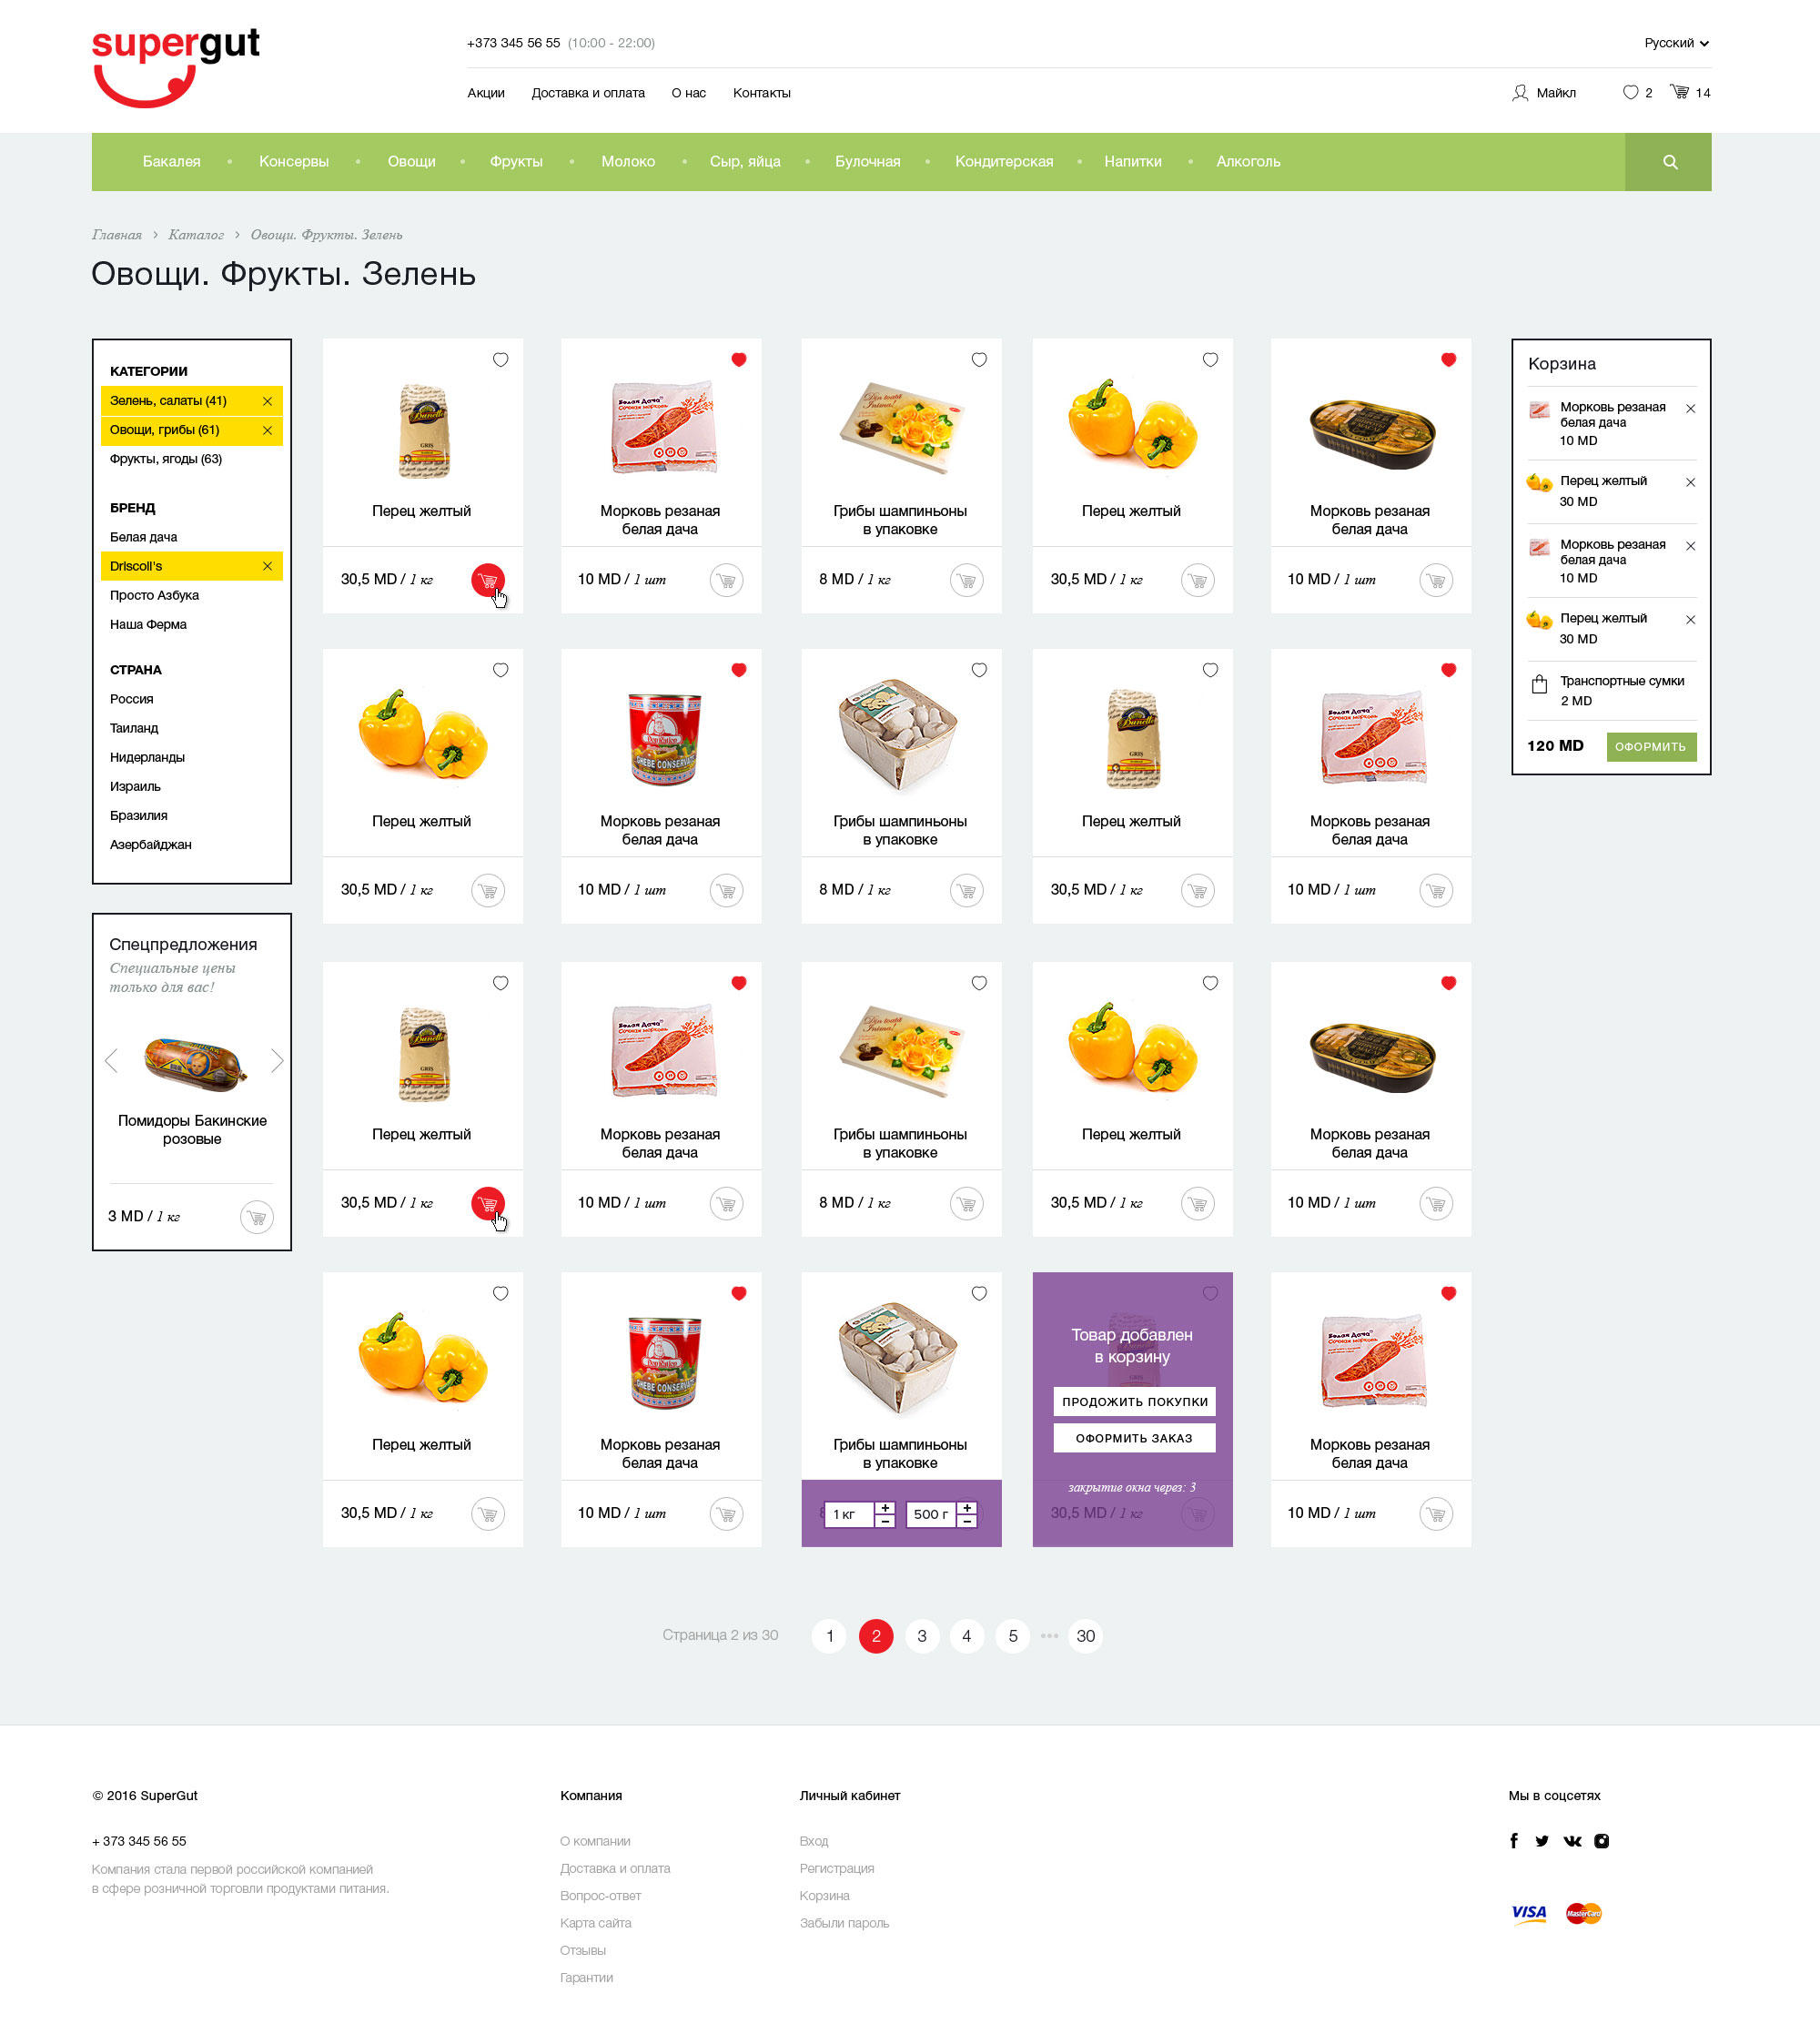 Supergut online supermarket